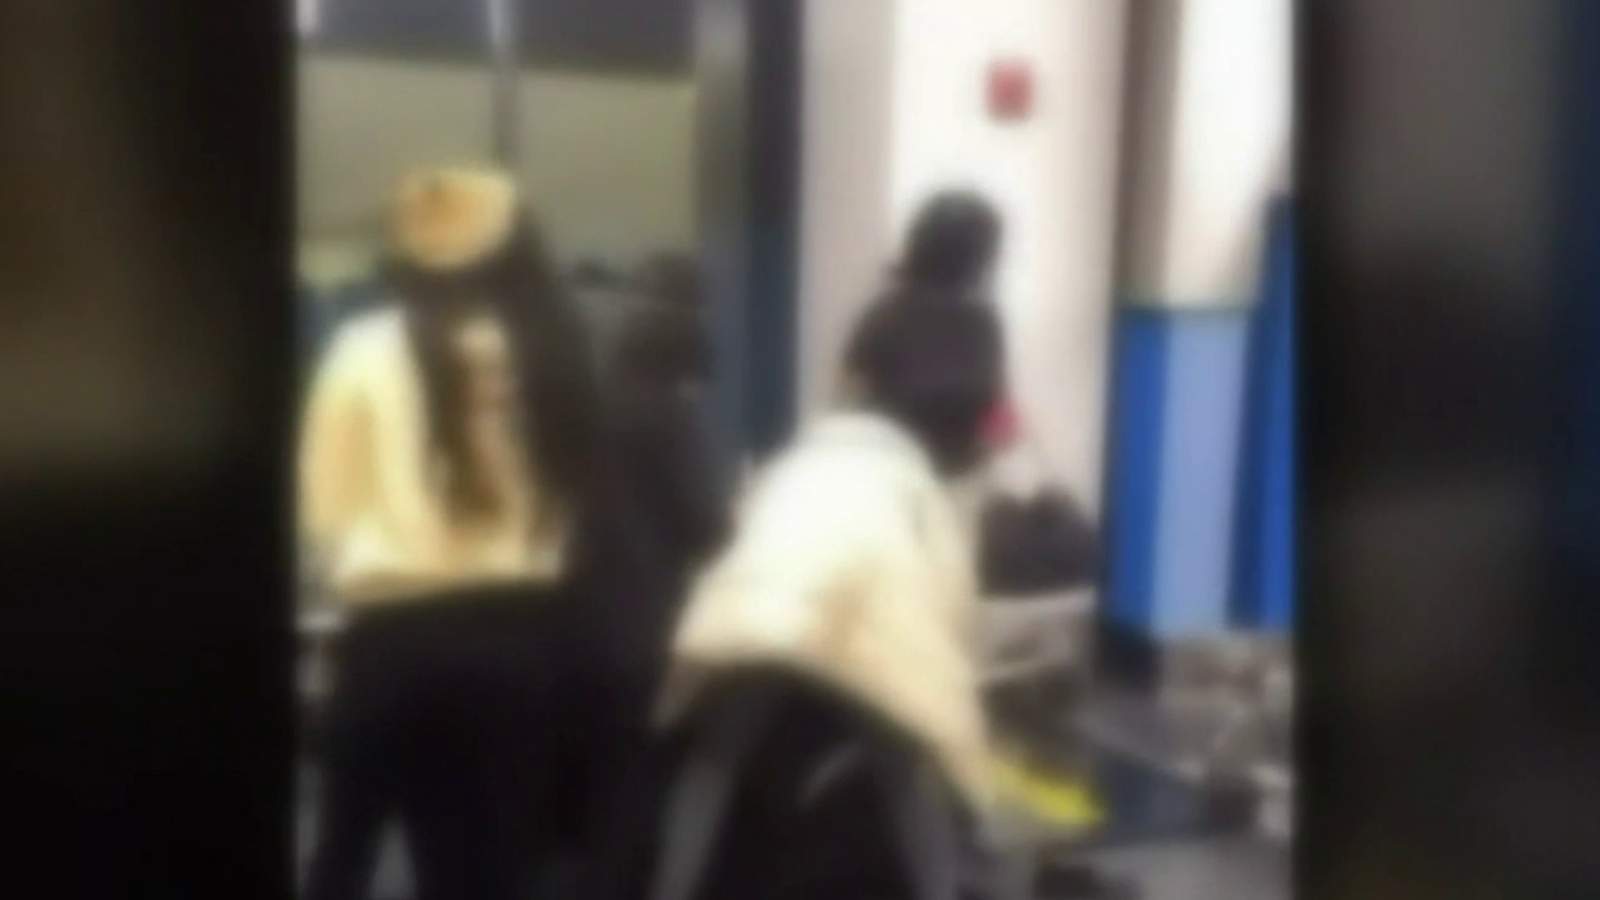 2 Spirit agents hurt, passengers arrested after bag dispute in Detroit, airline says